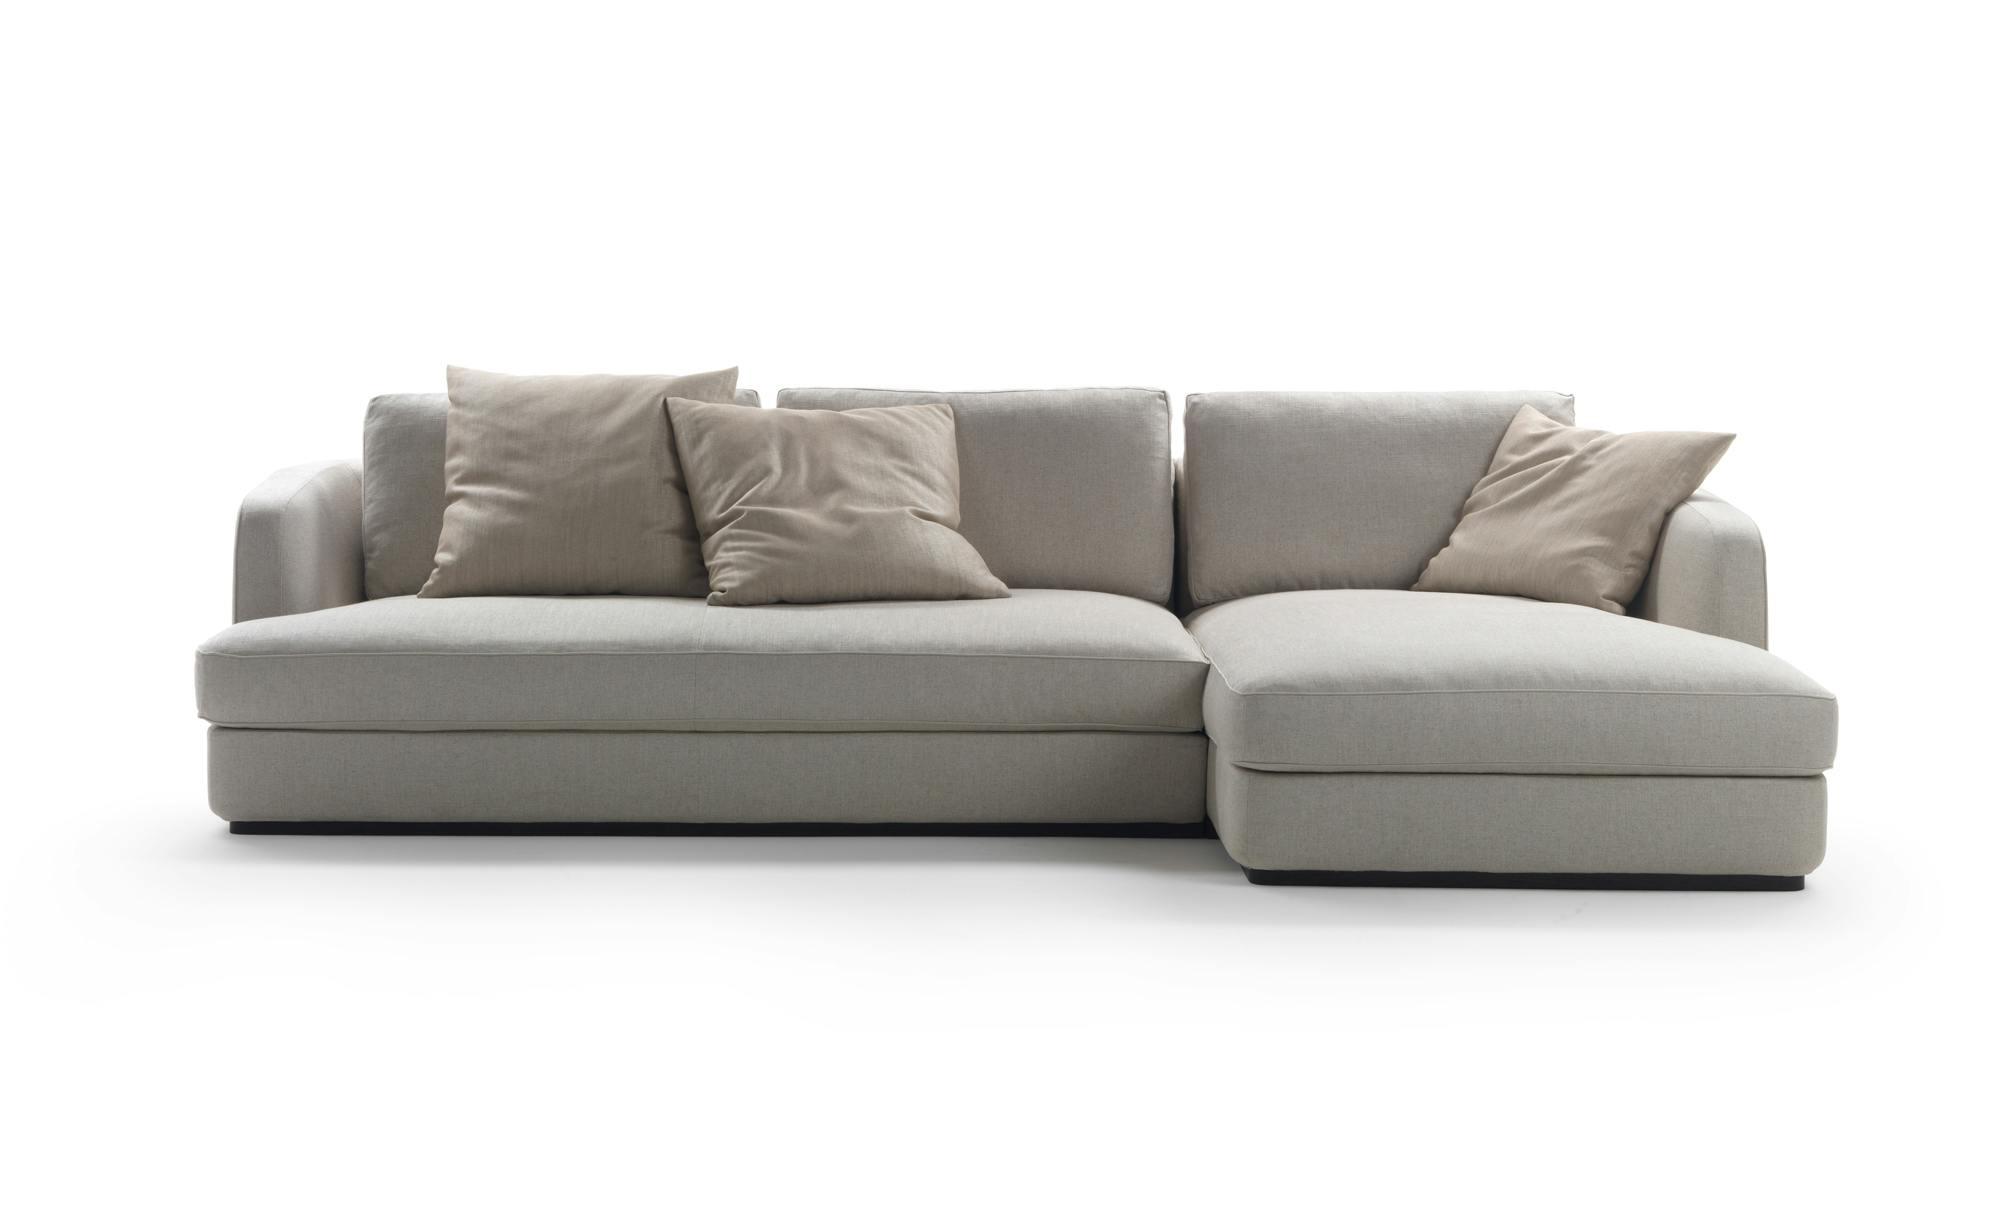 Barret sofa by Flexform Mood - Fanuli Furniture